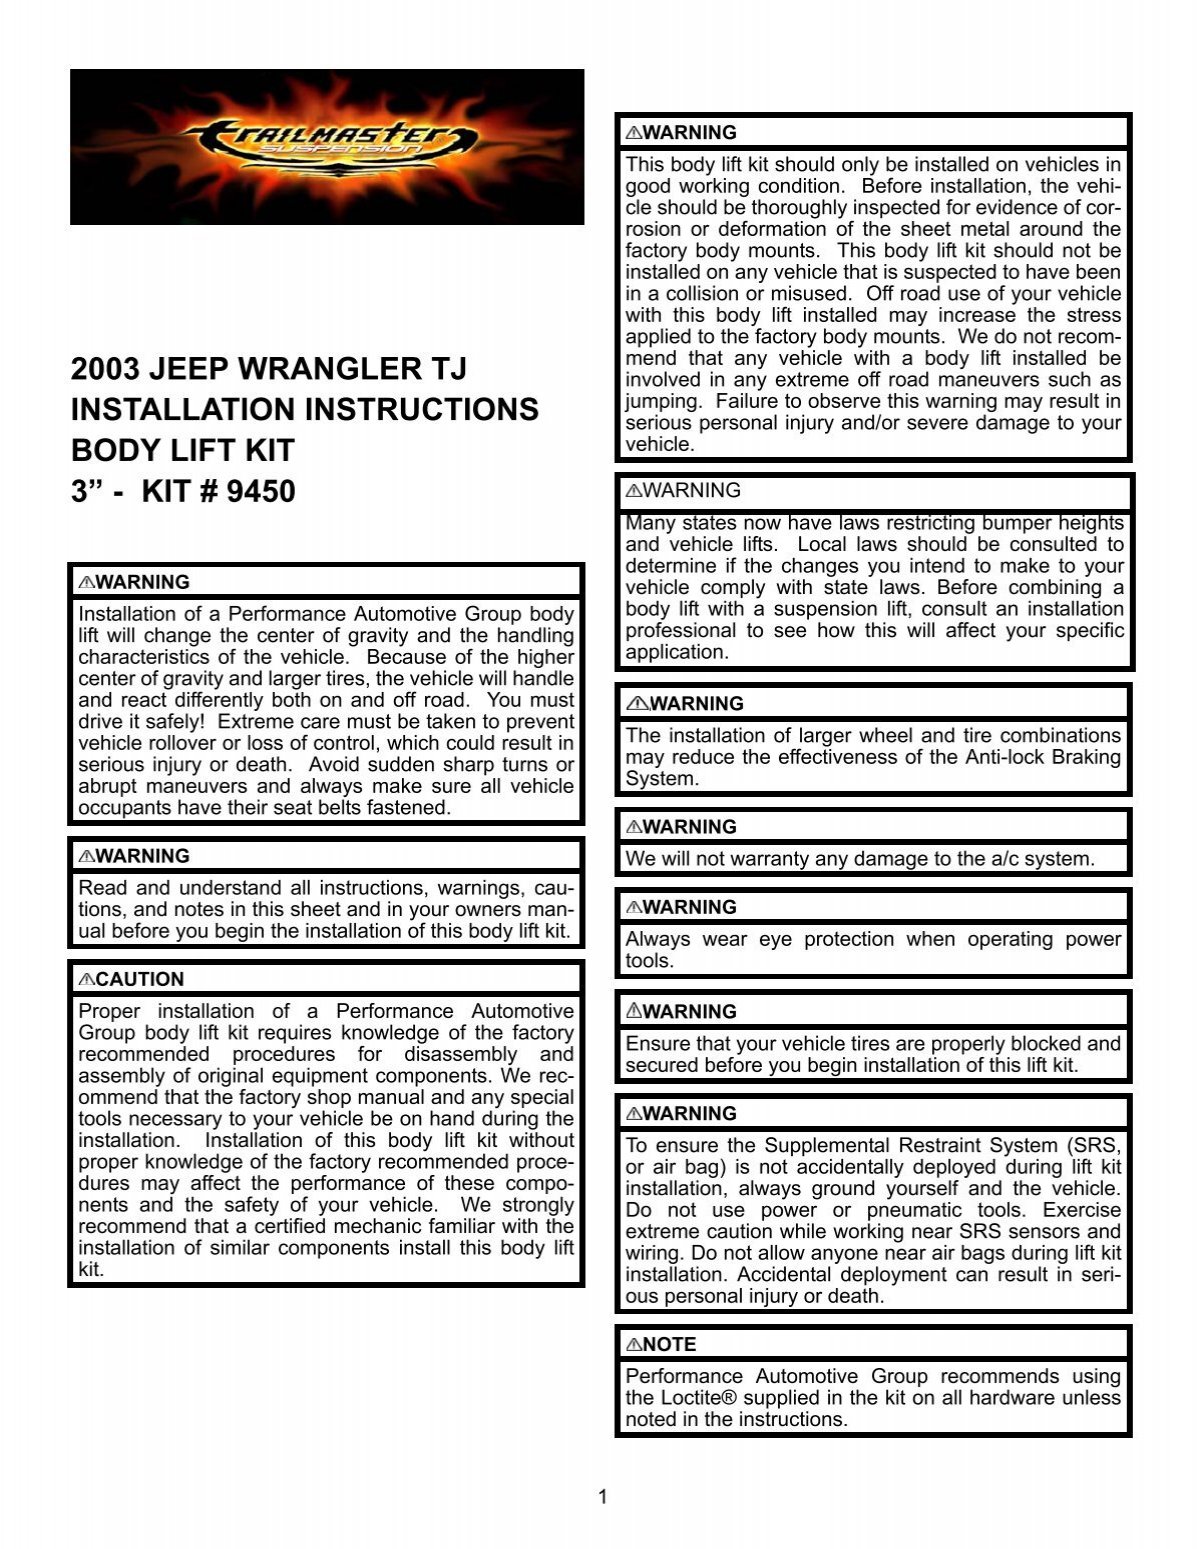 2003 jeep wrangler tj installation instructions body lift kit 3” - kit #  9450